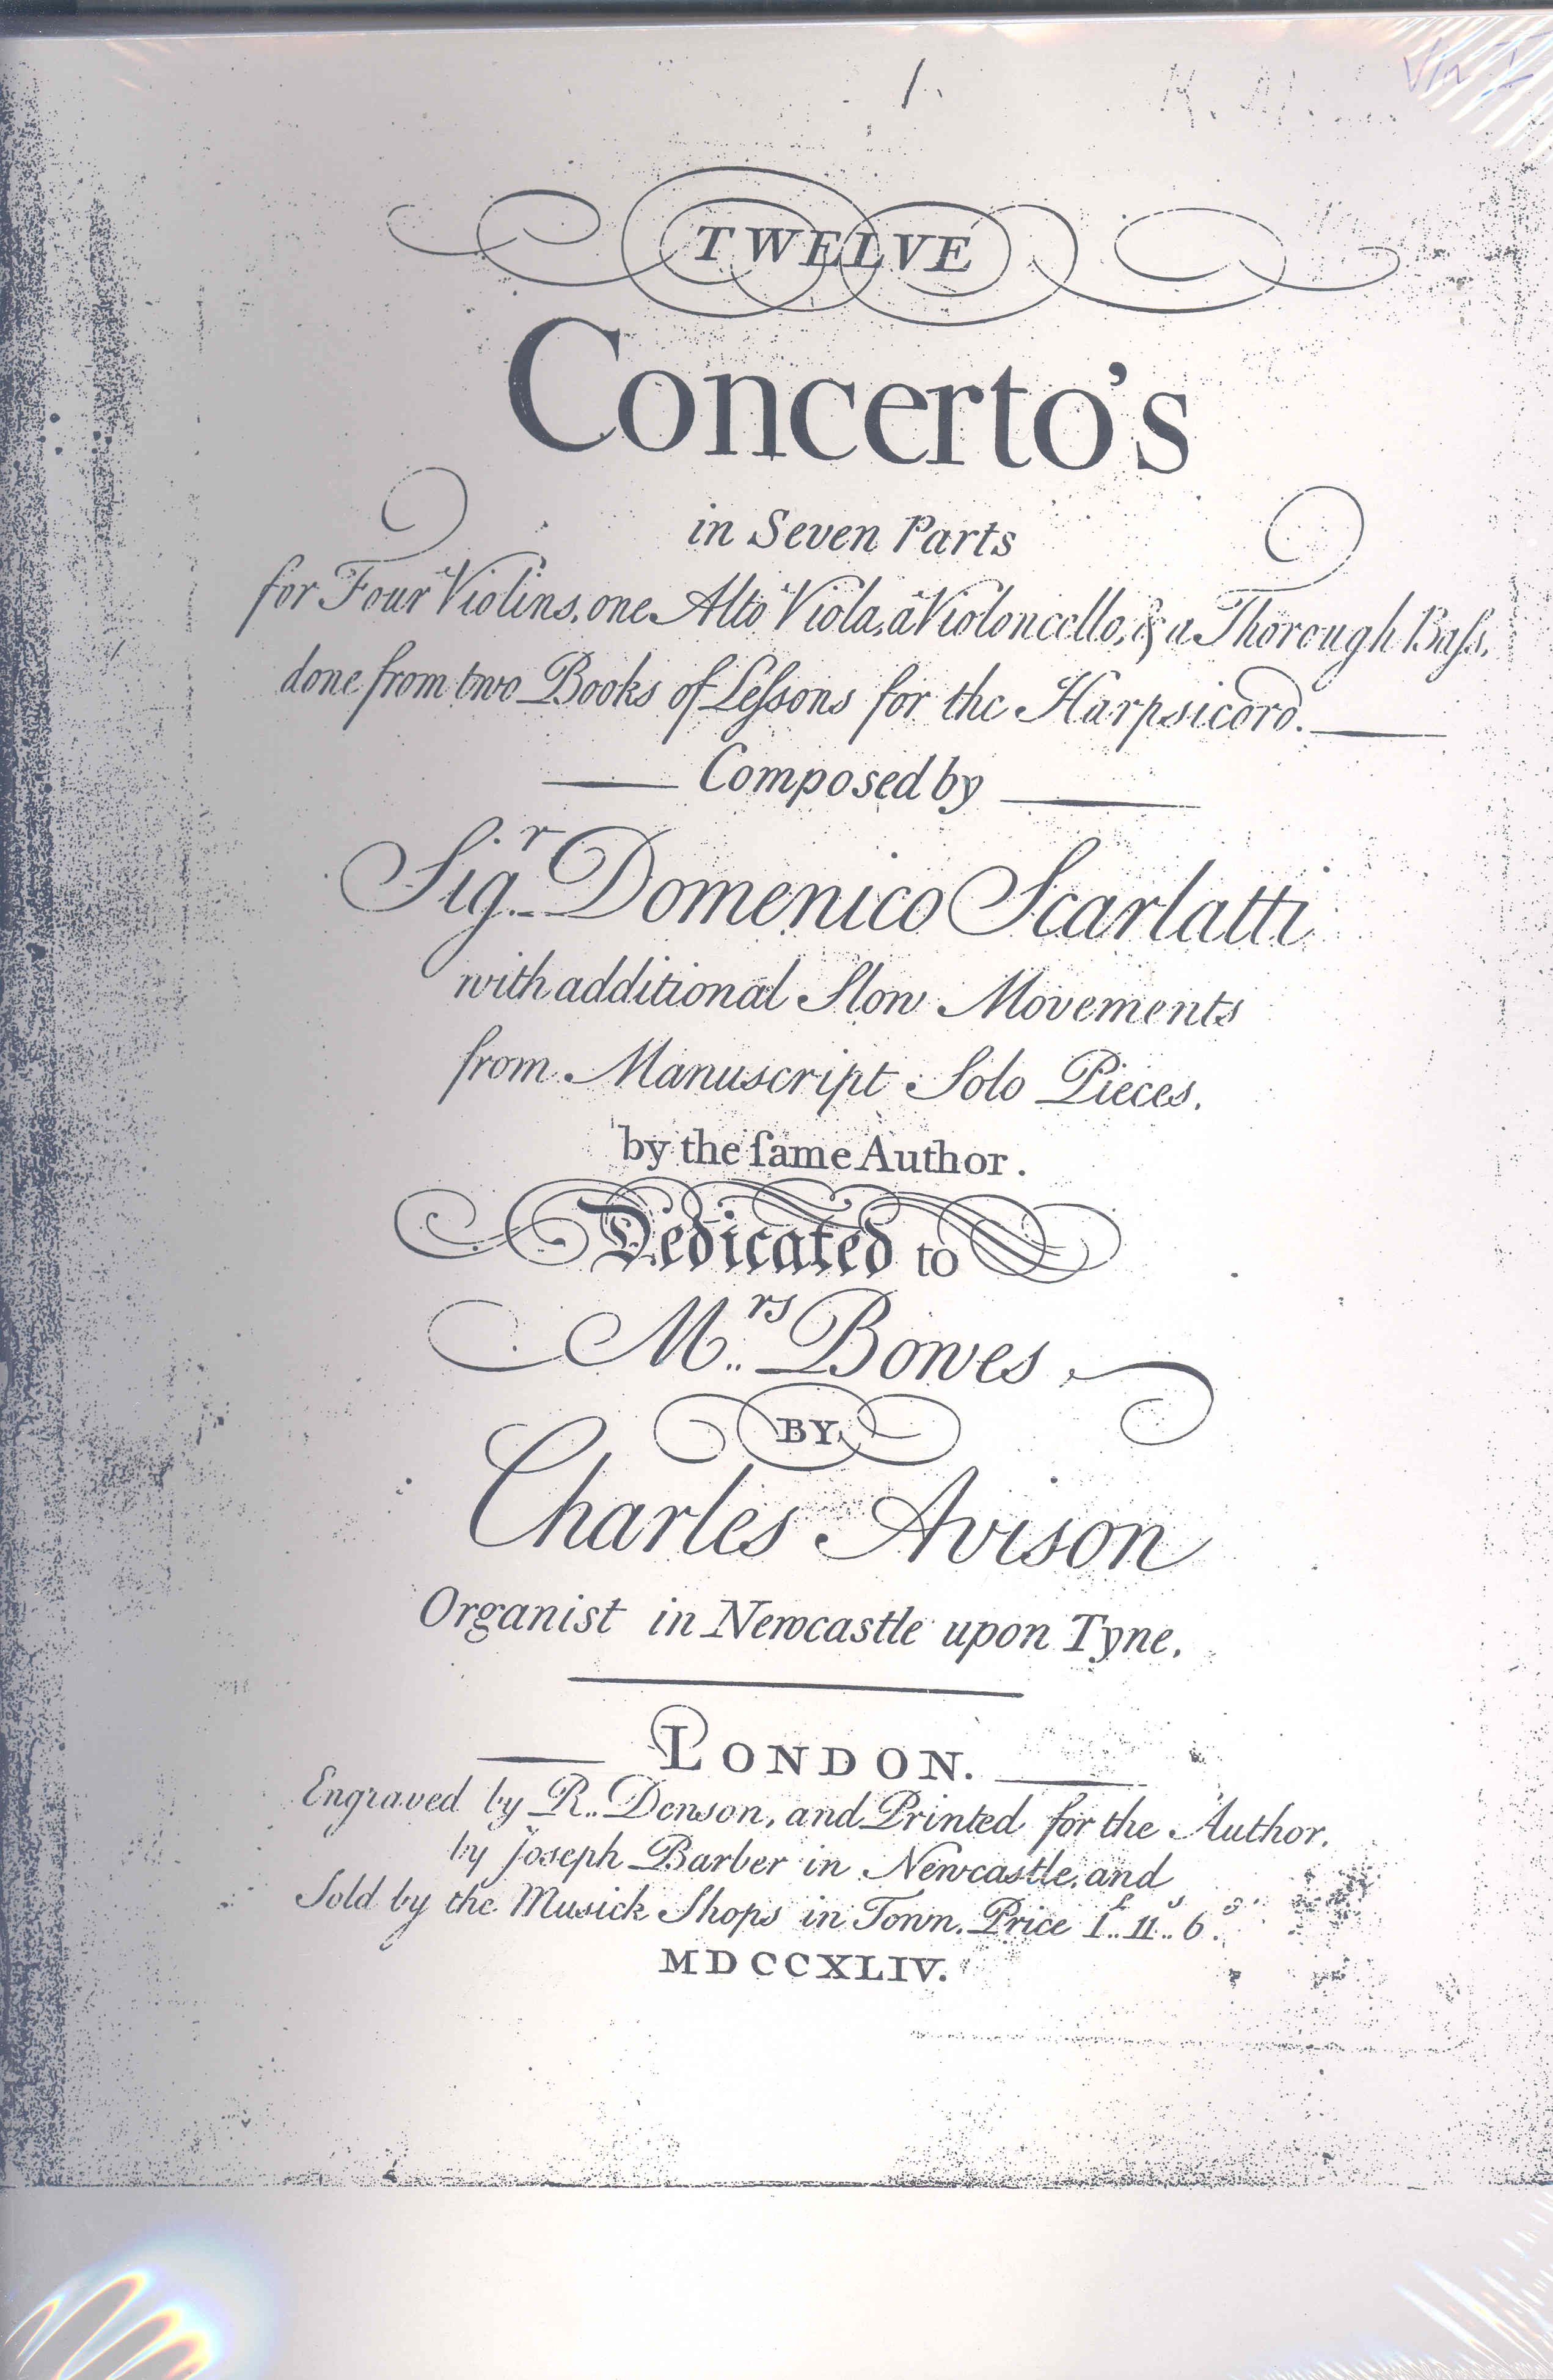 Avison 12 Concertos After Scarlatti Orch Set Sheet Music Songbook